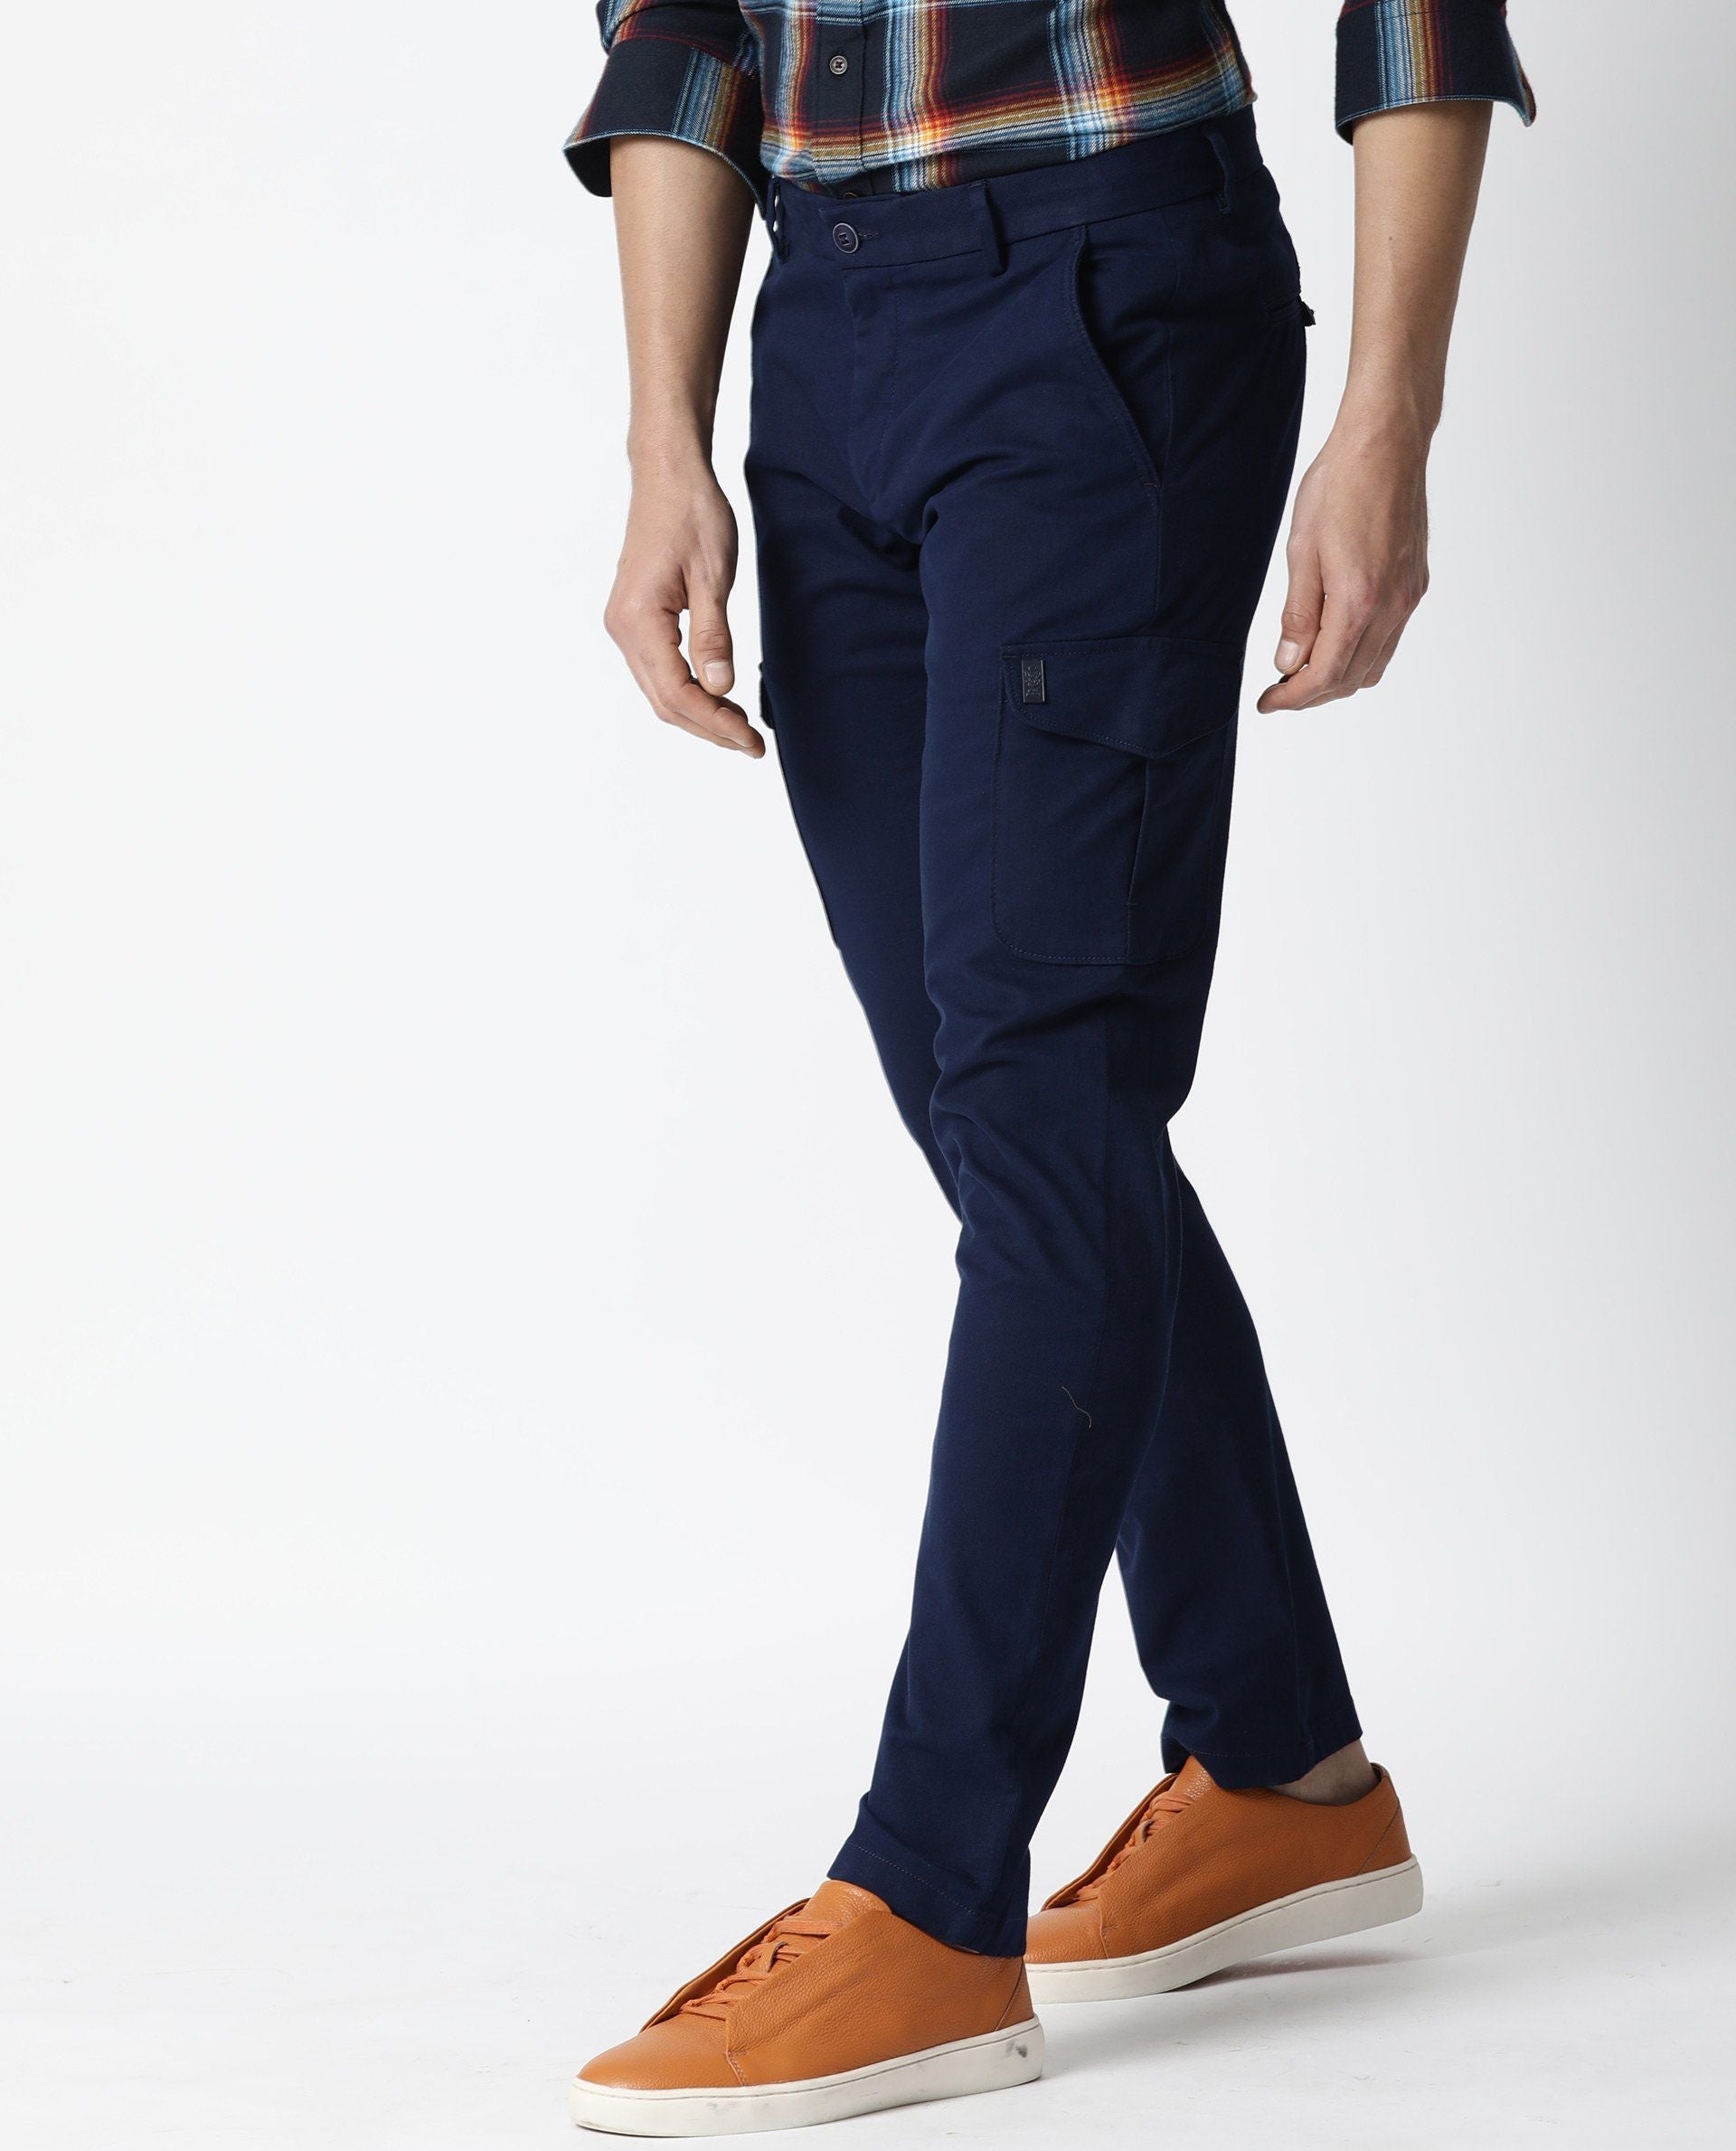 Cotton/Linen Mens Navy Blue Cargo Pant, Size: 28-36 Inch